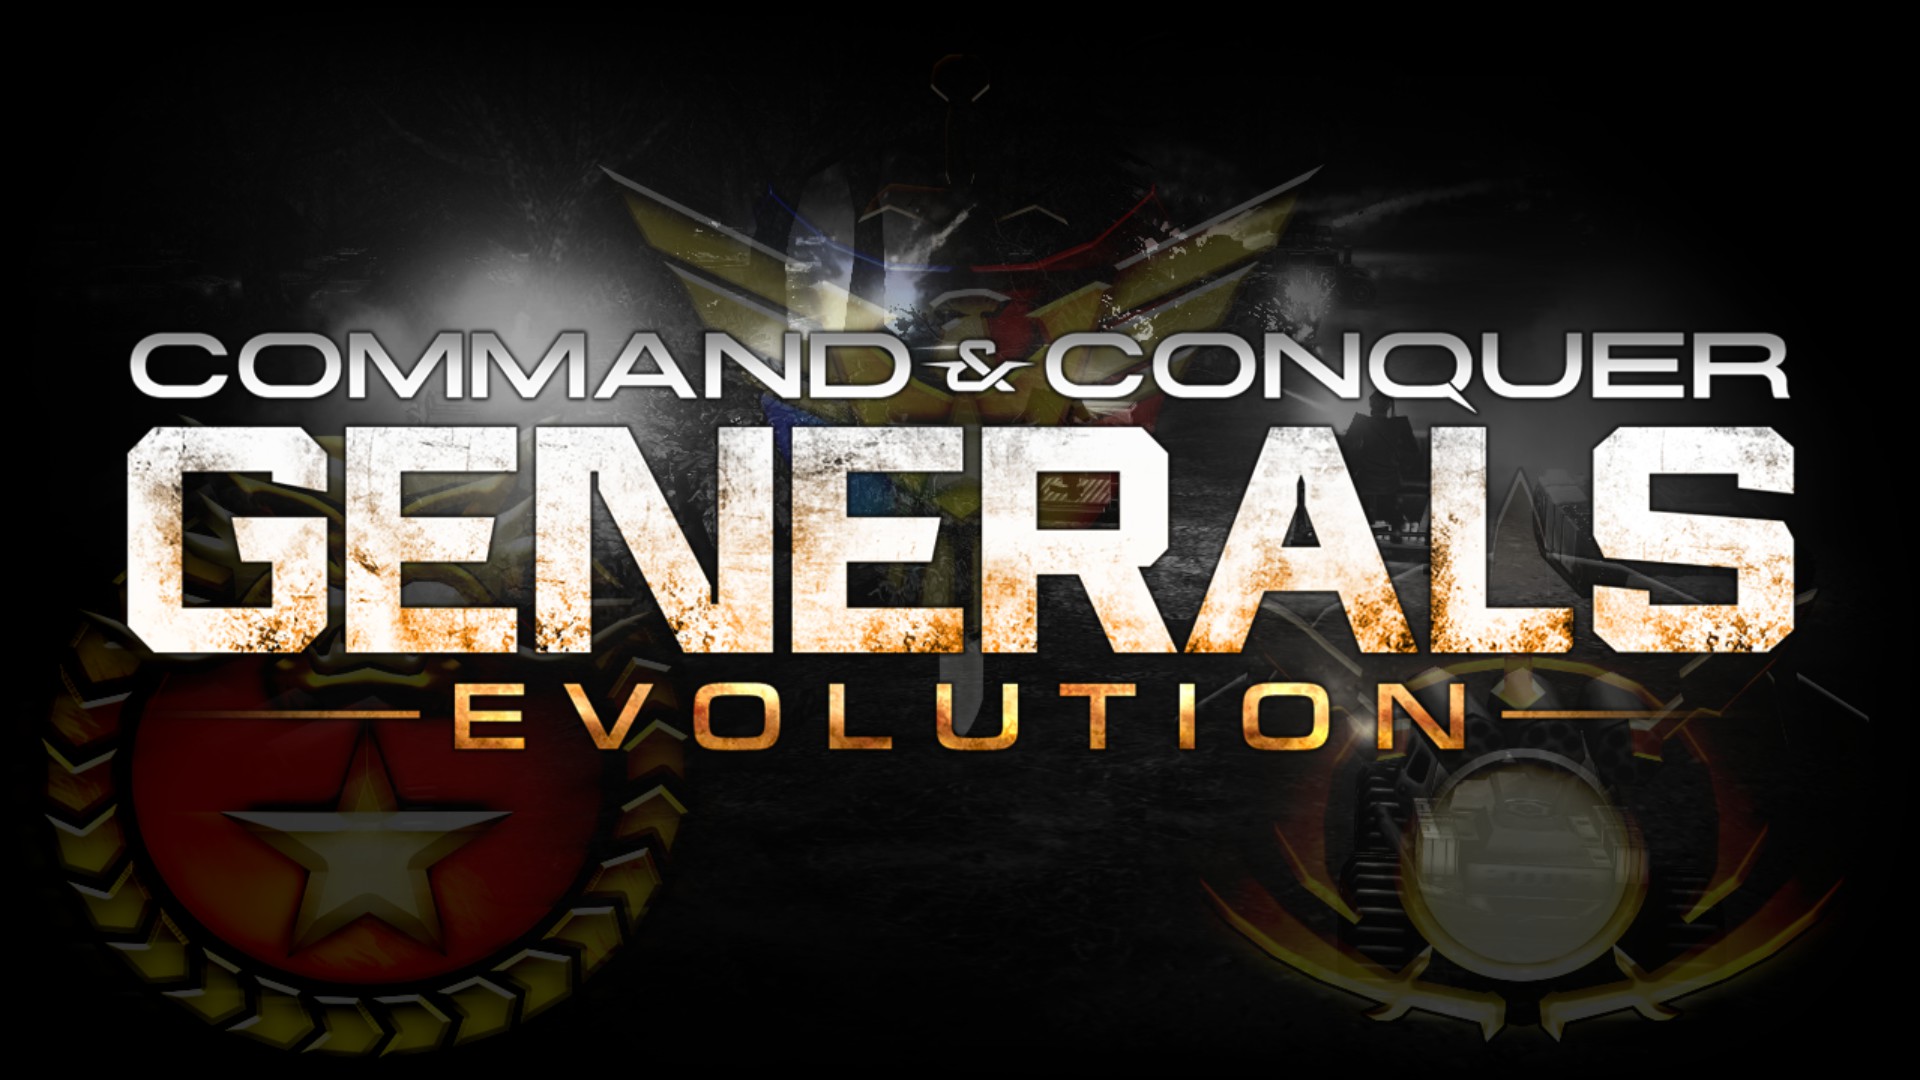 C&C Generals Evolution, Wallpaper image